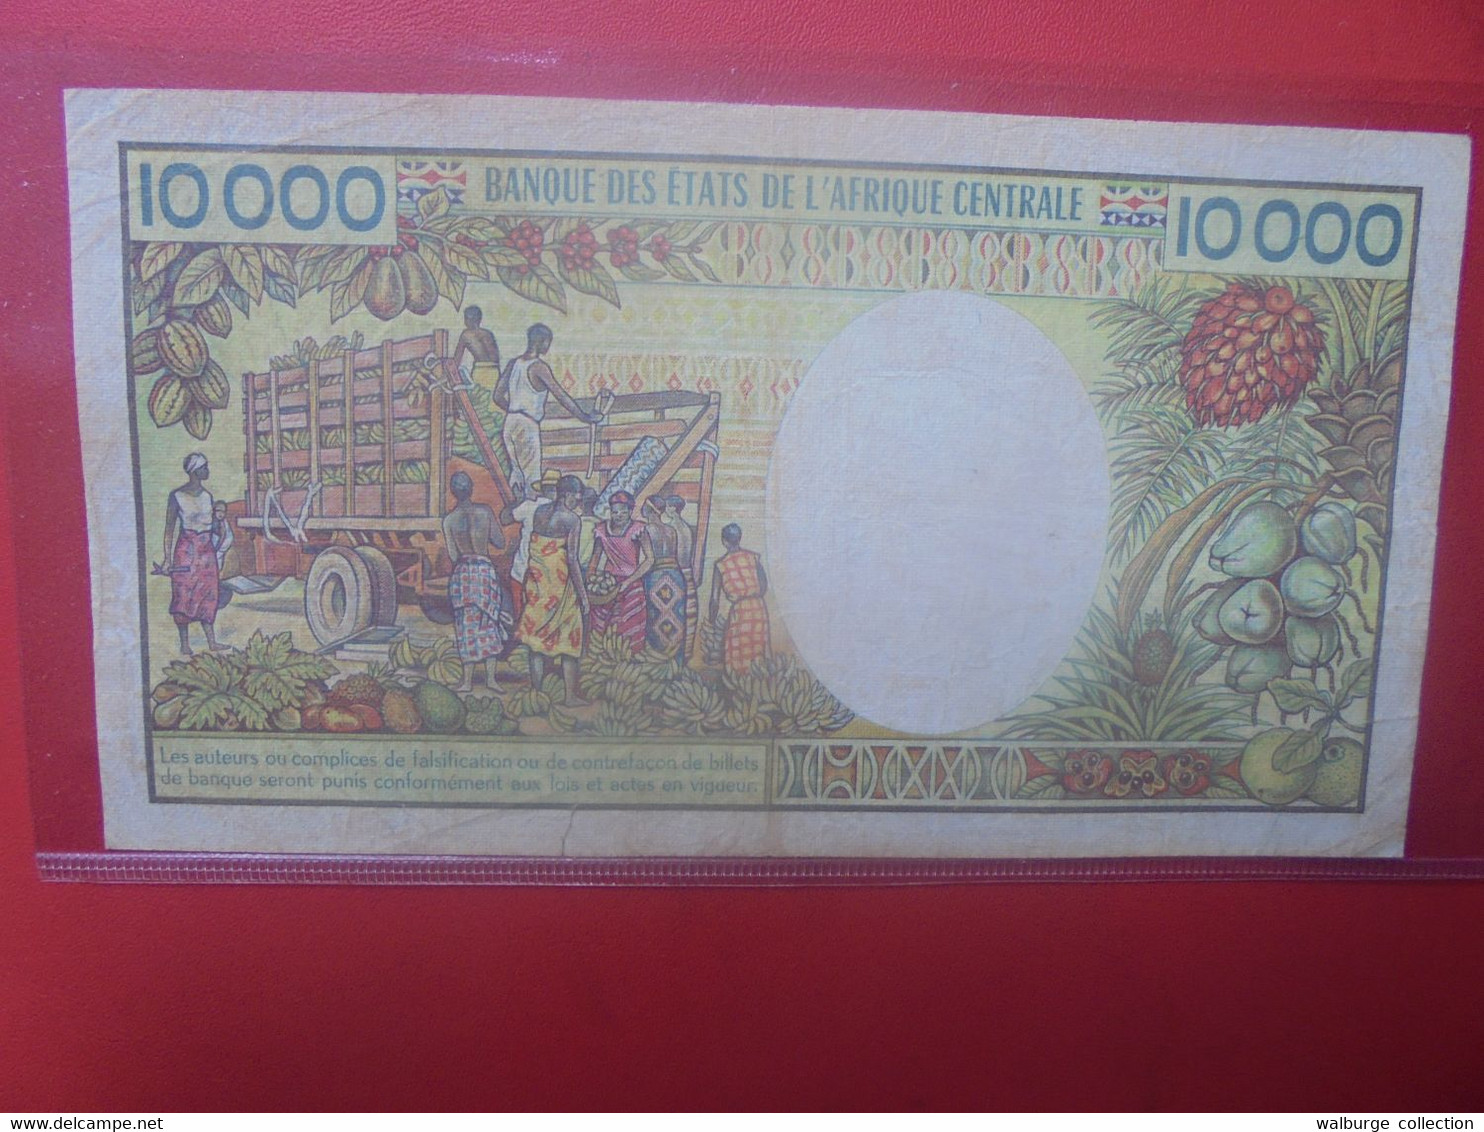 CAMEROUN 10.000 Francs 1981 WPM N°20 Circuler (L.2) - Cameroon